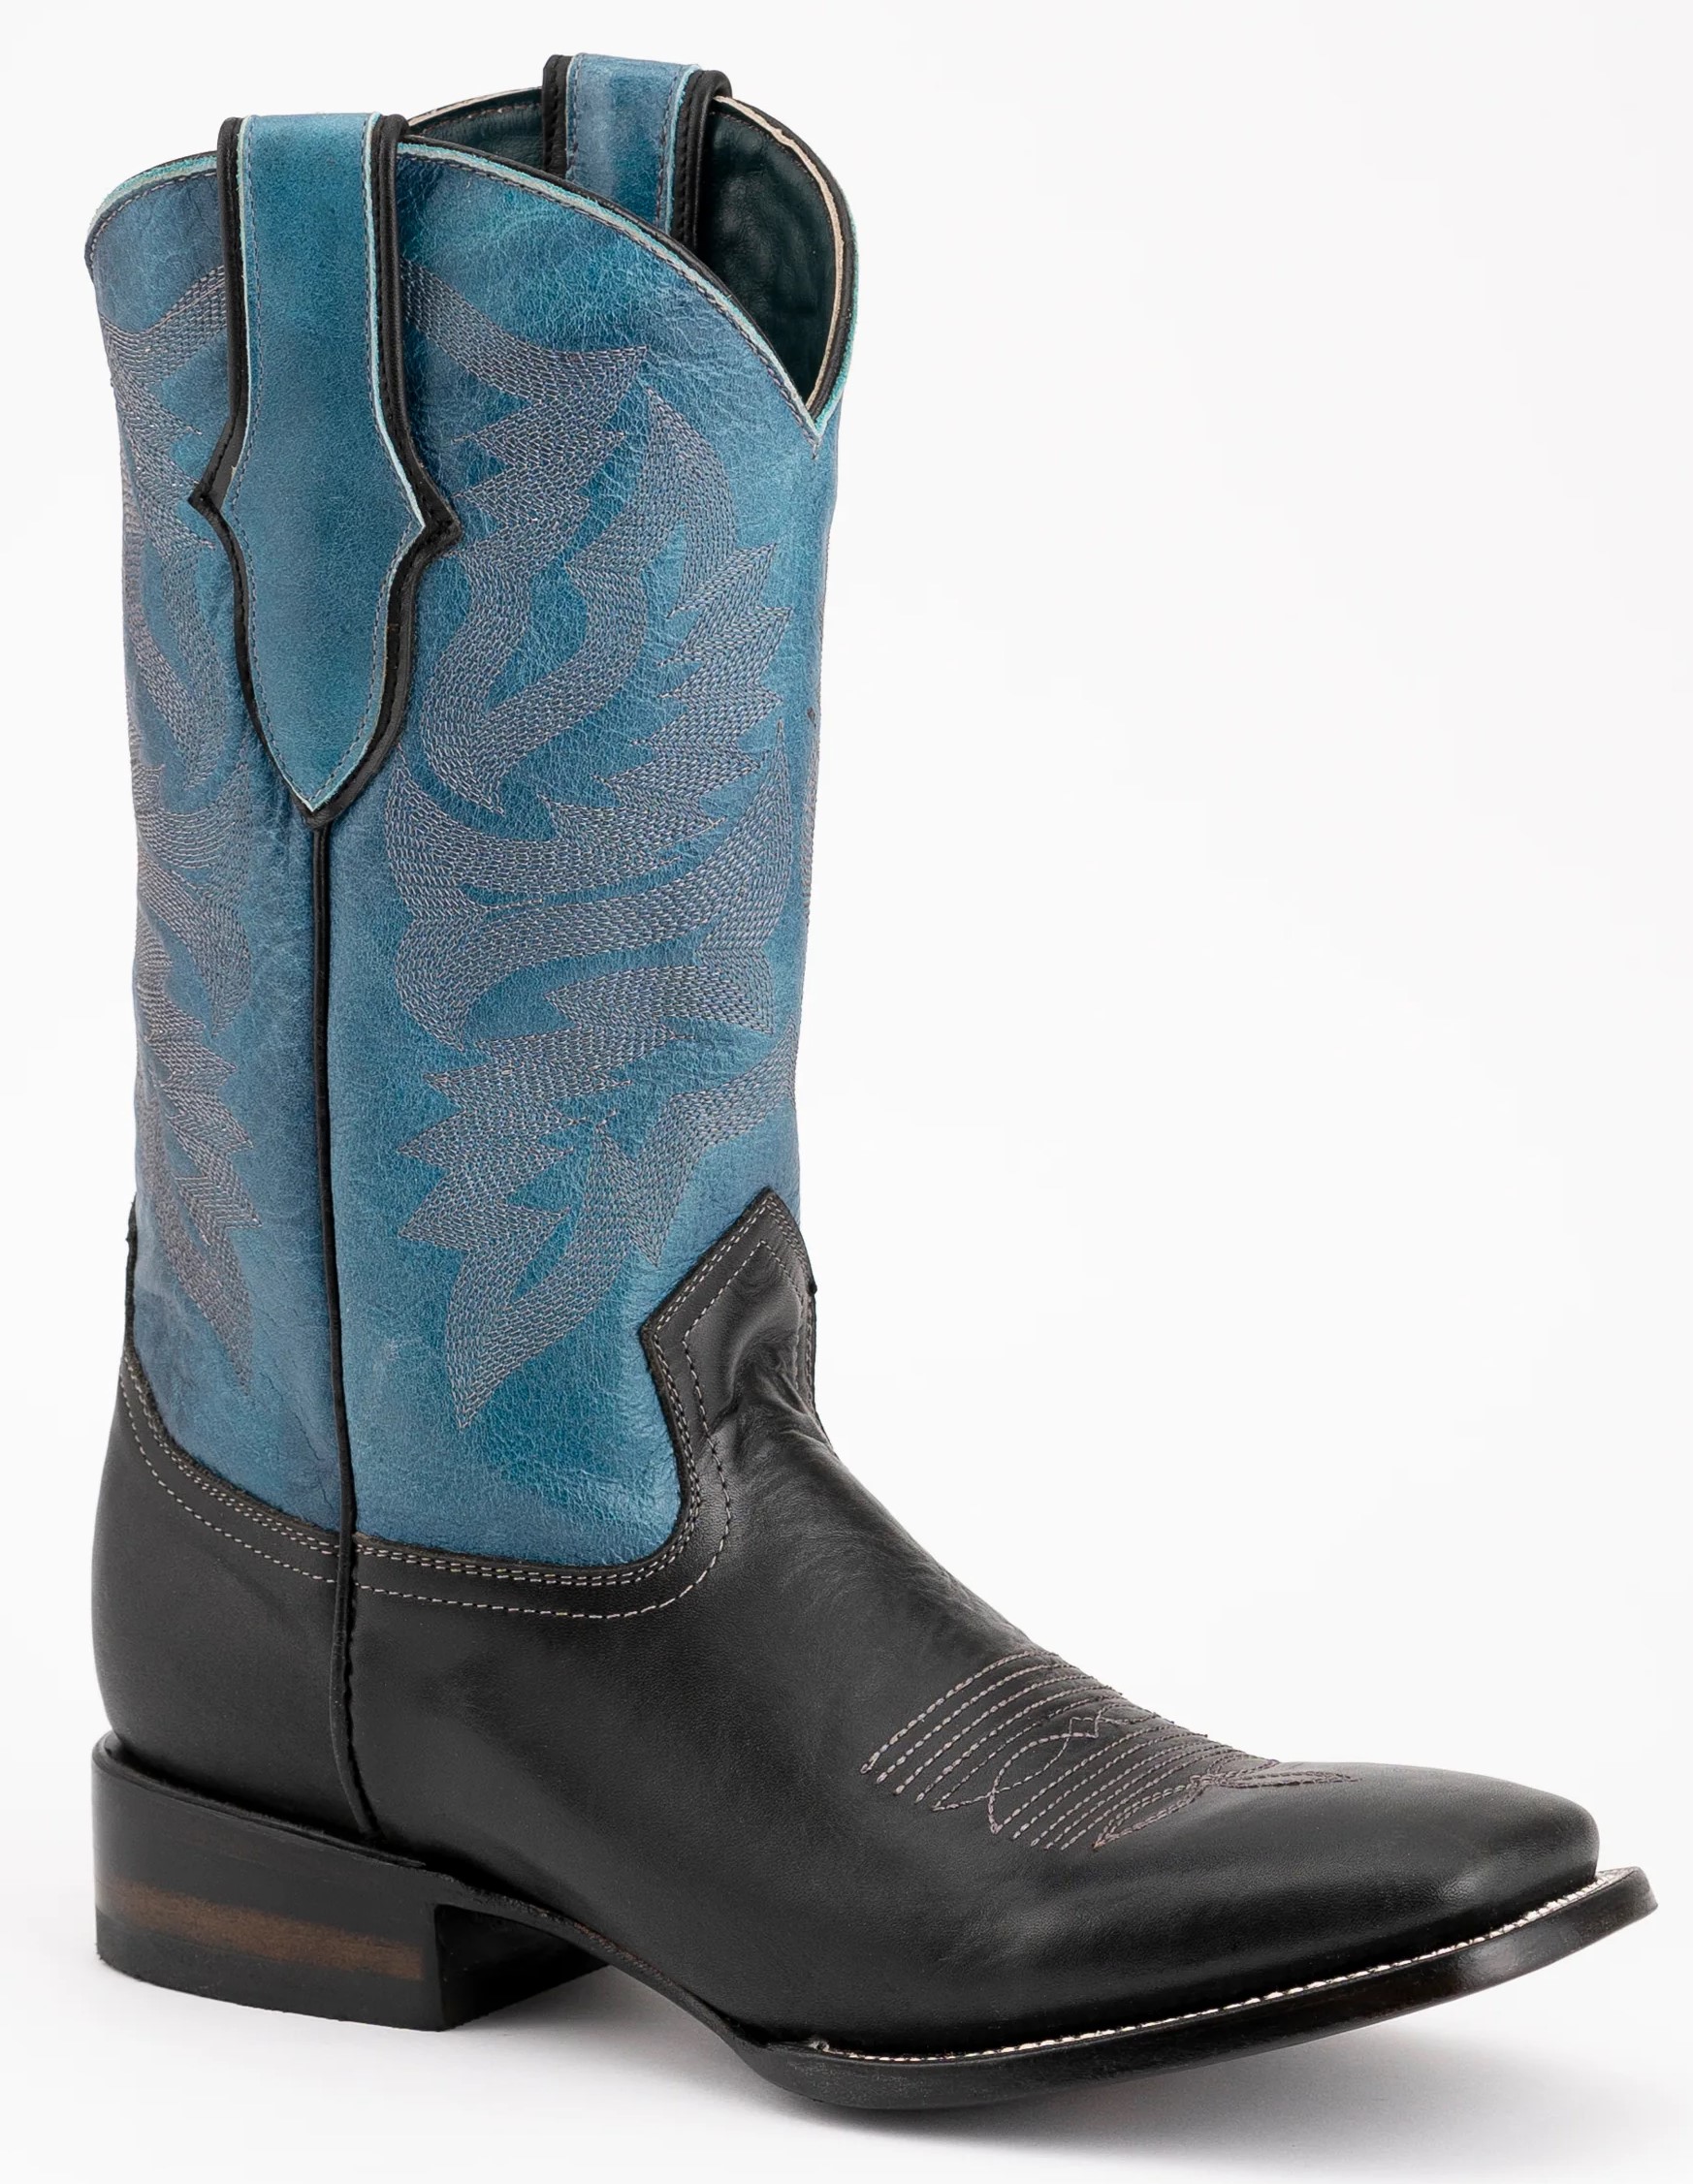 Ferrini "Gunner" Black / Blue Genuine Full Grain Leather Square Toe Cowboy Boots 12193-04